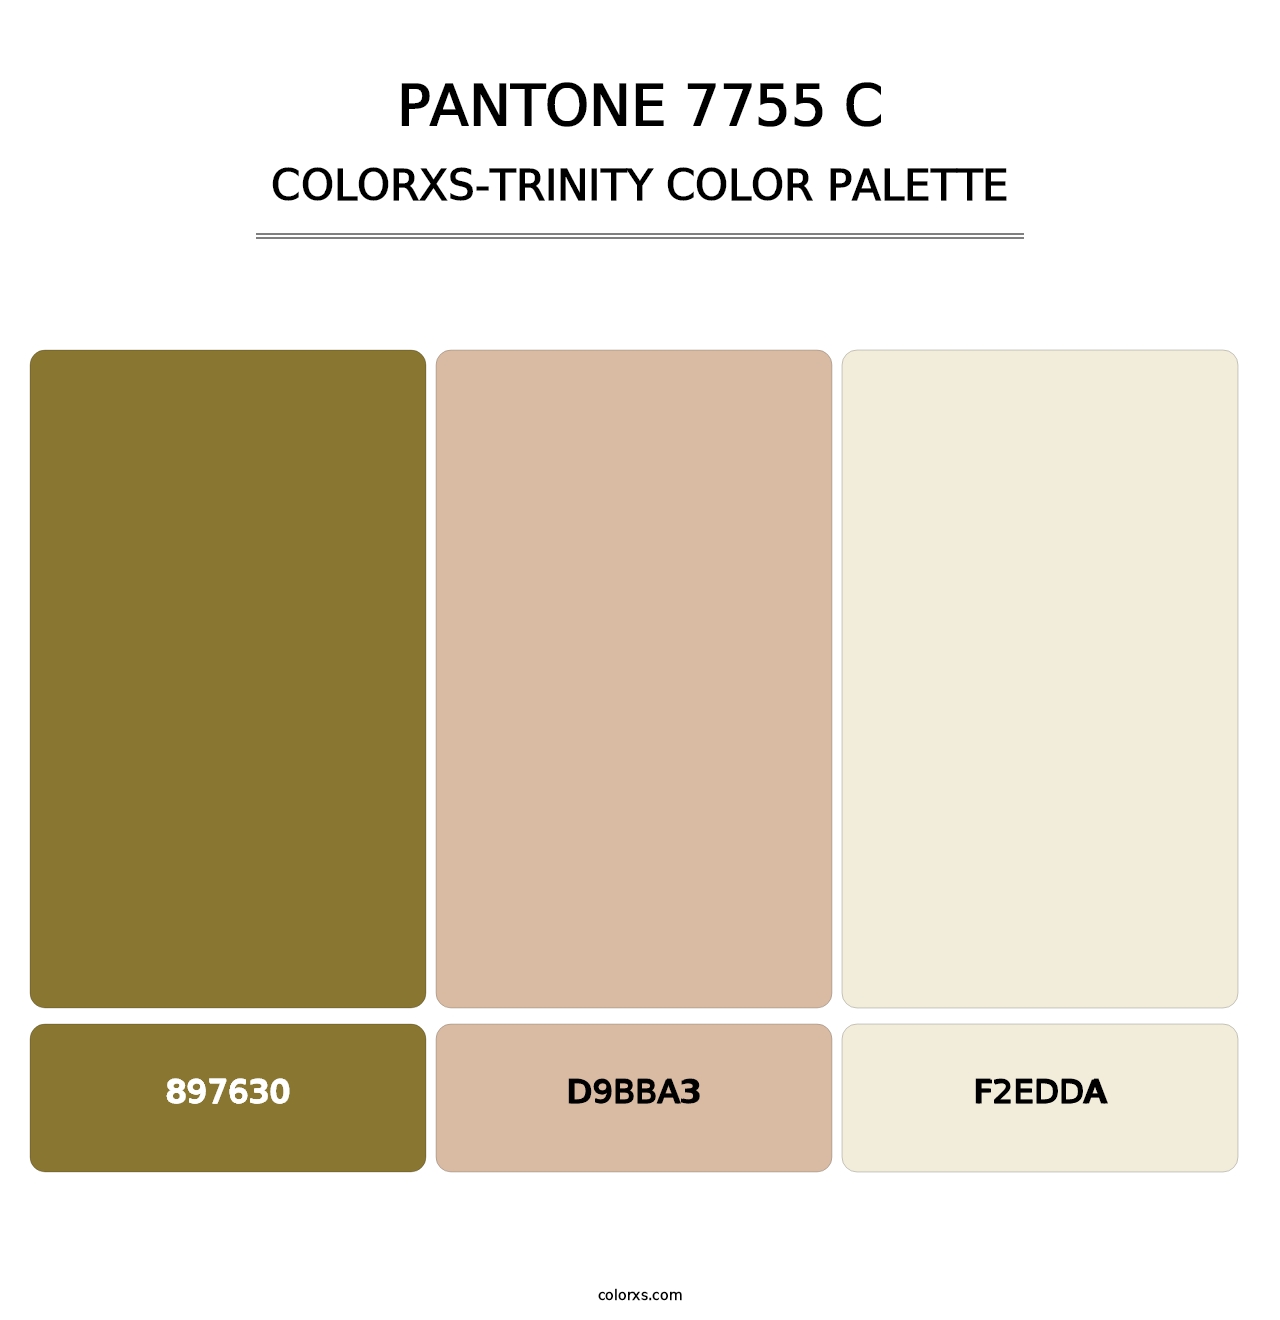 PANTONE 7755 C - Colorxs Trinity Palette